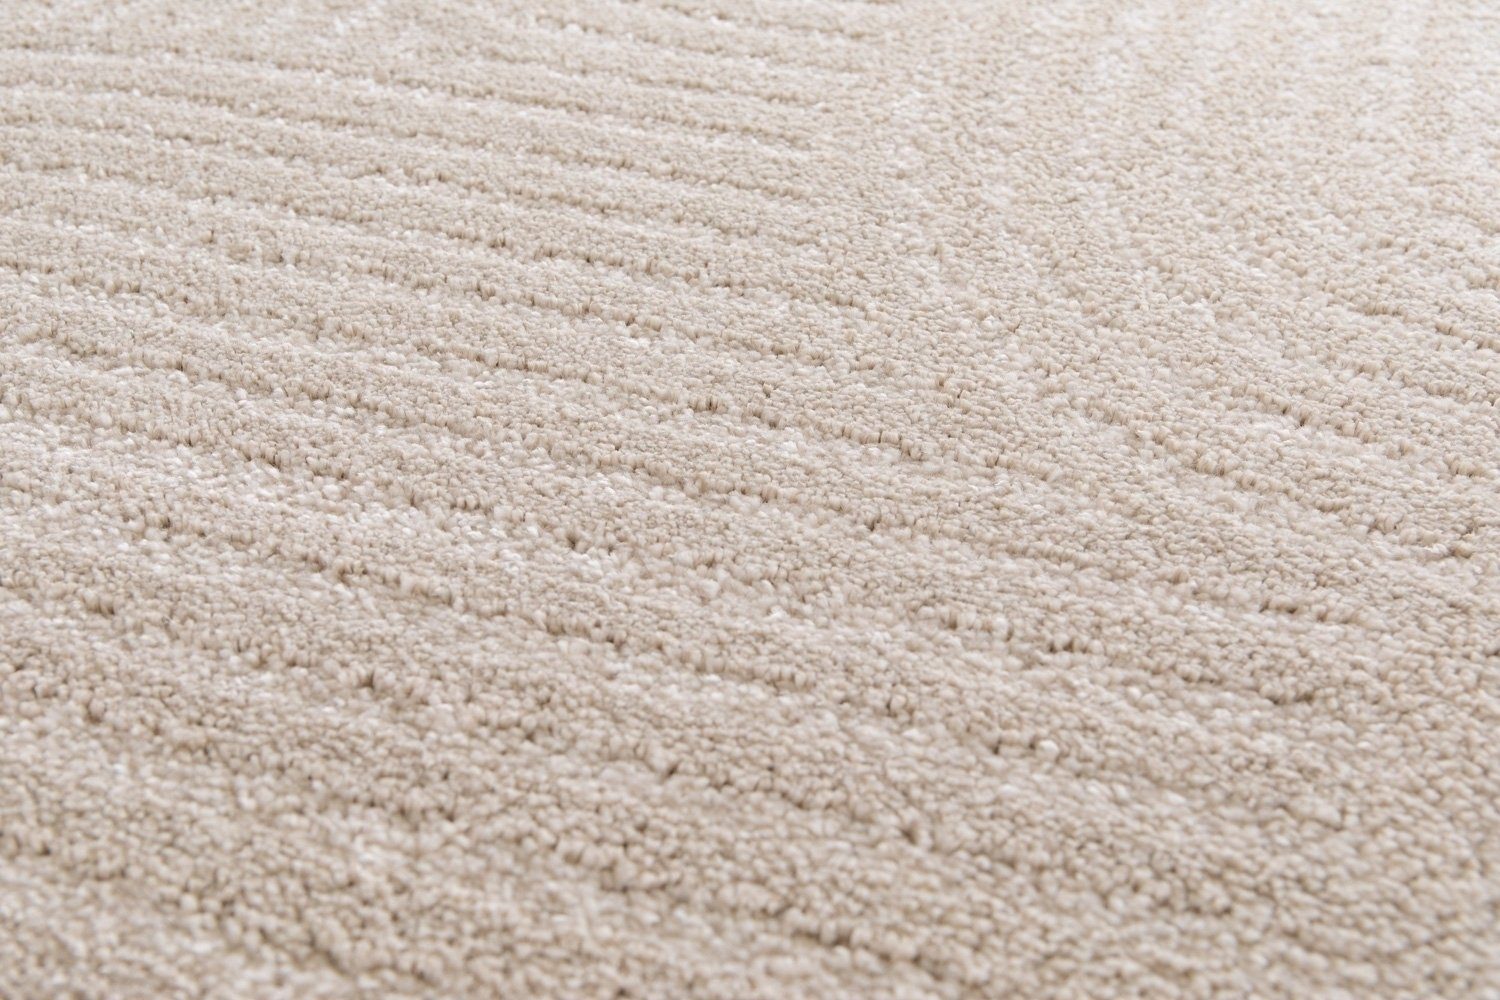 Teppich MOON, Polypropylen, Beige, 160 Balta cm, Höhe: quadratisch, Rugs, Gemustert, mm 17 x 230